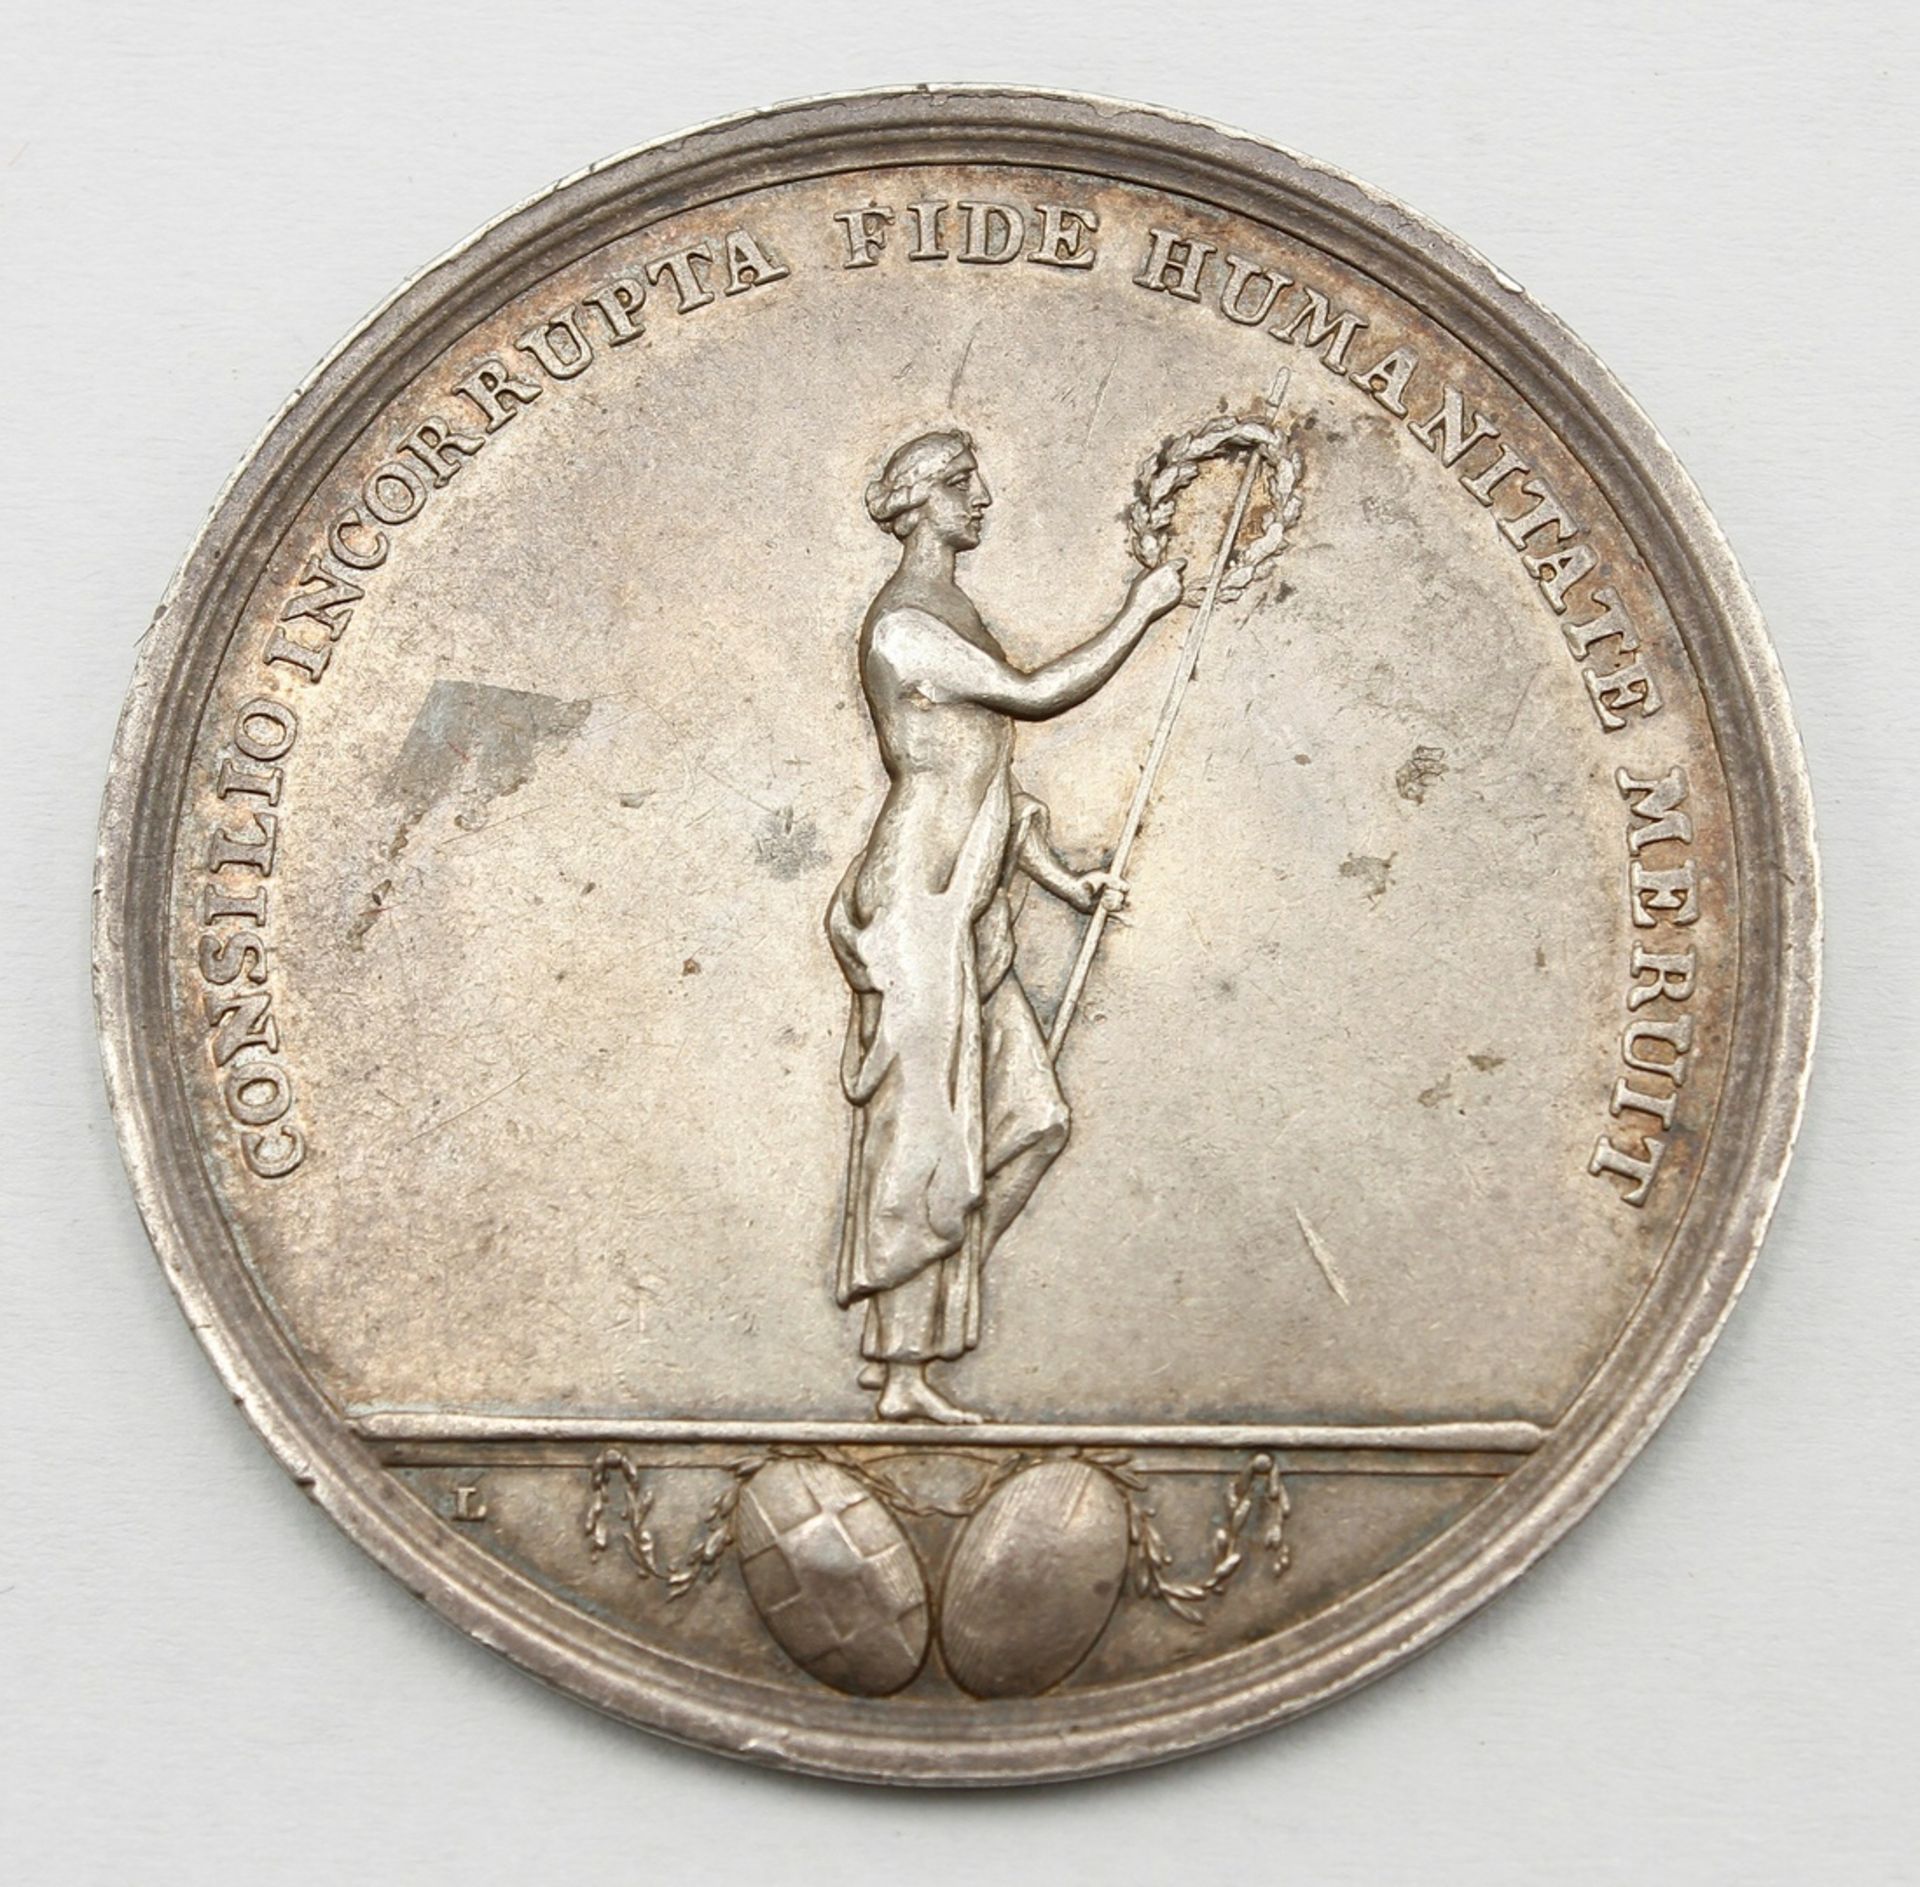 Jubiläums Medaille Halberstadt, 1802, J. J. Albert Hecht - Image 2 of 2